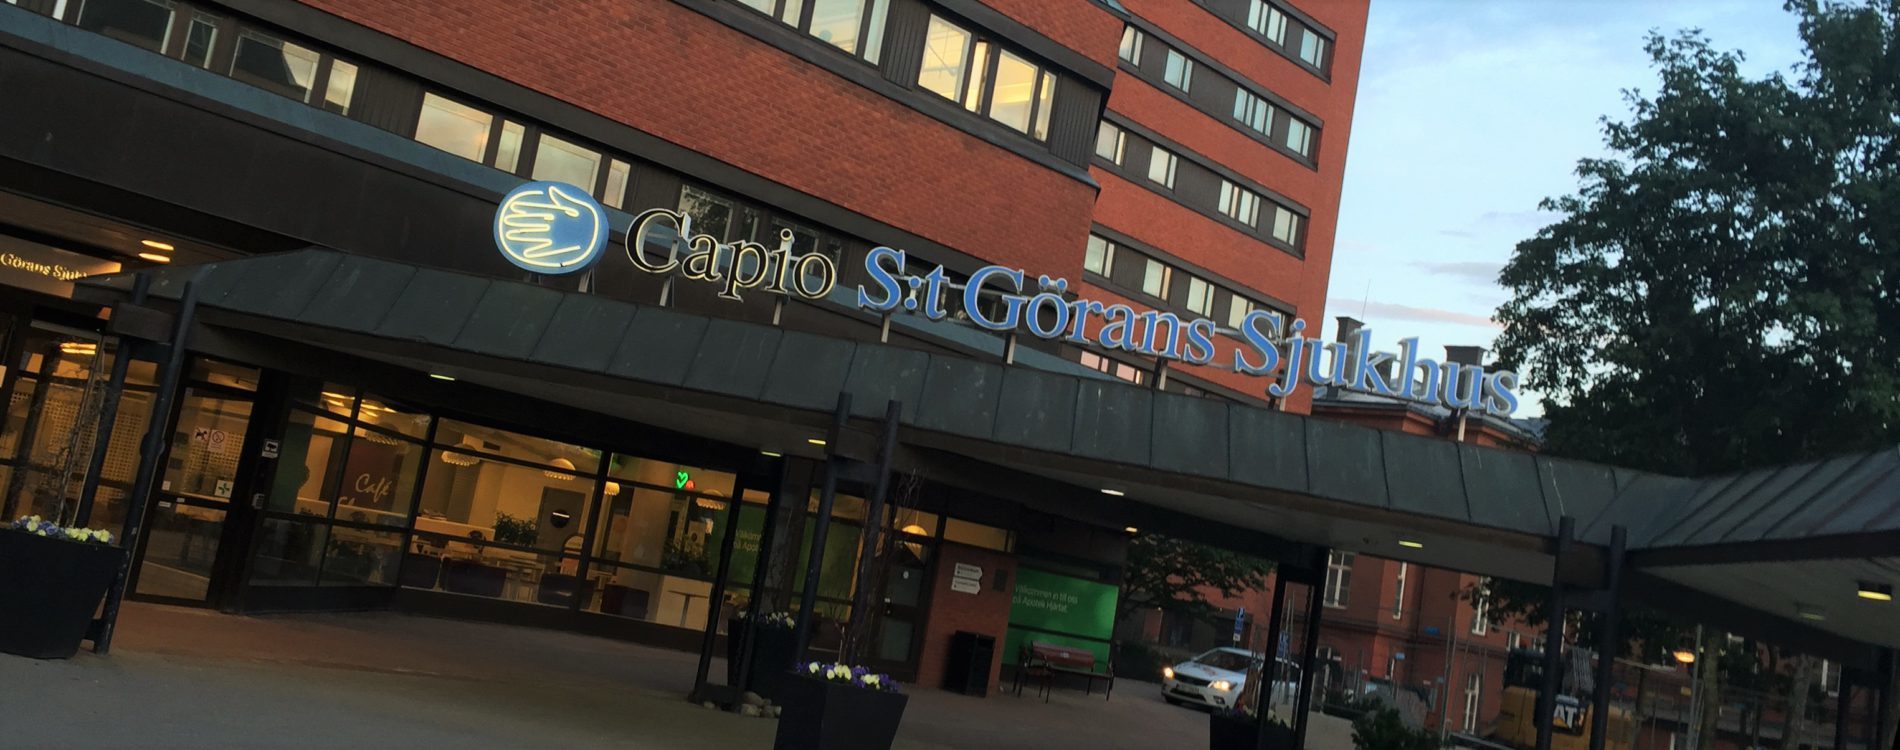 St. Göran sjukhus